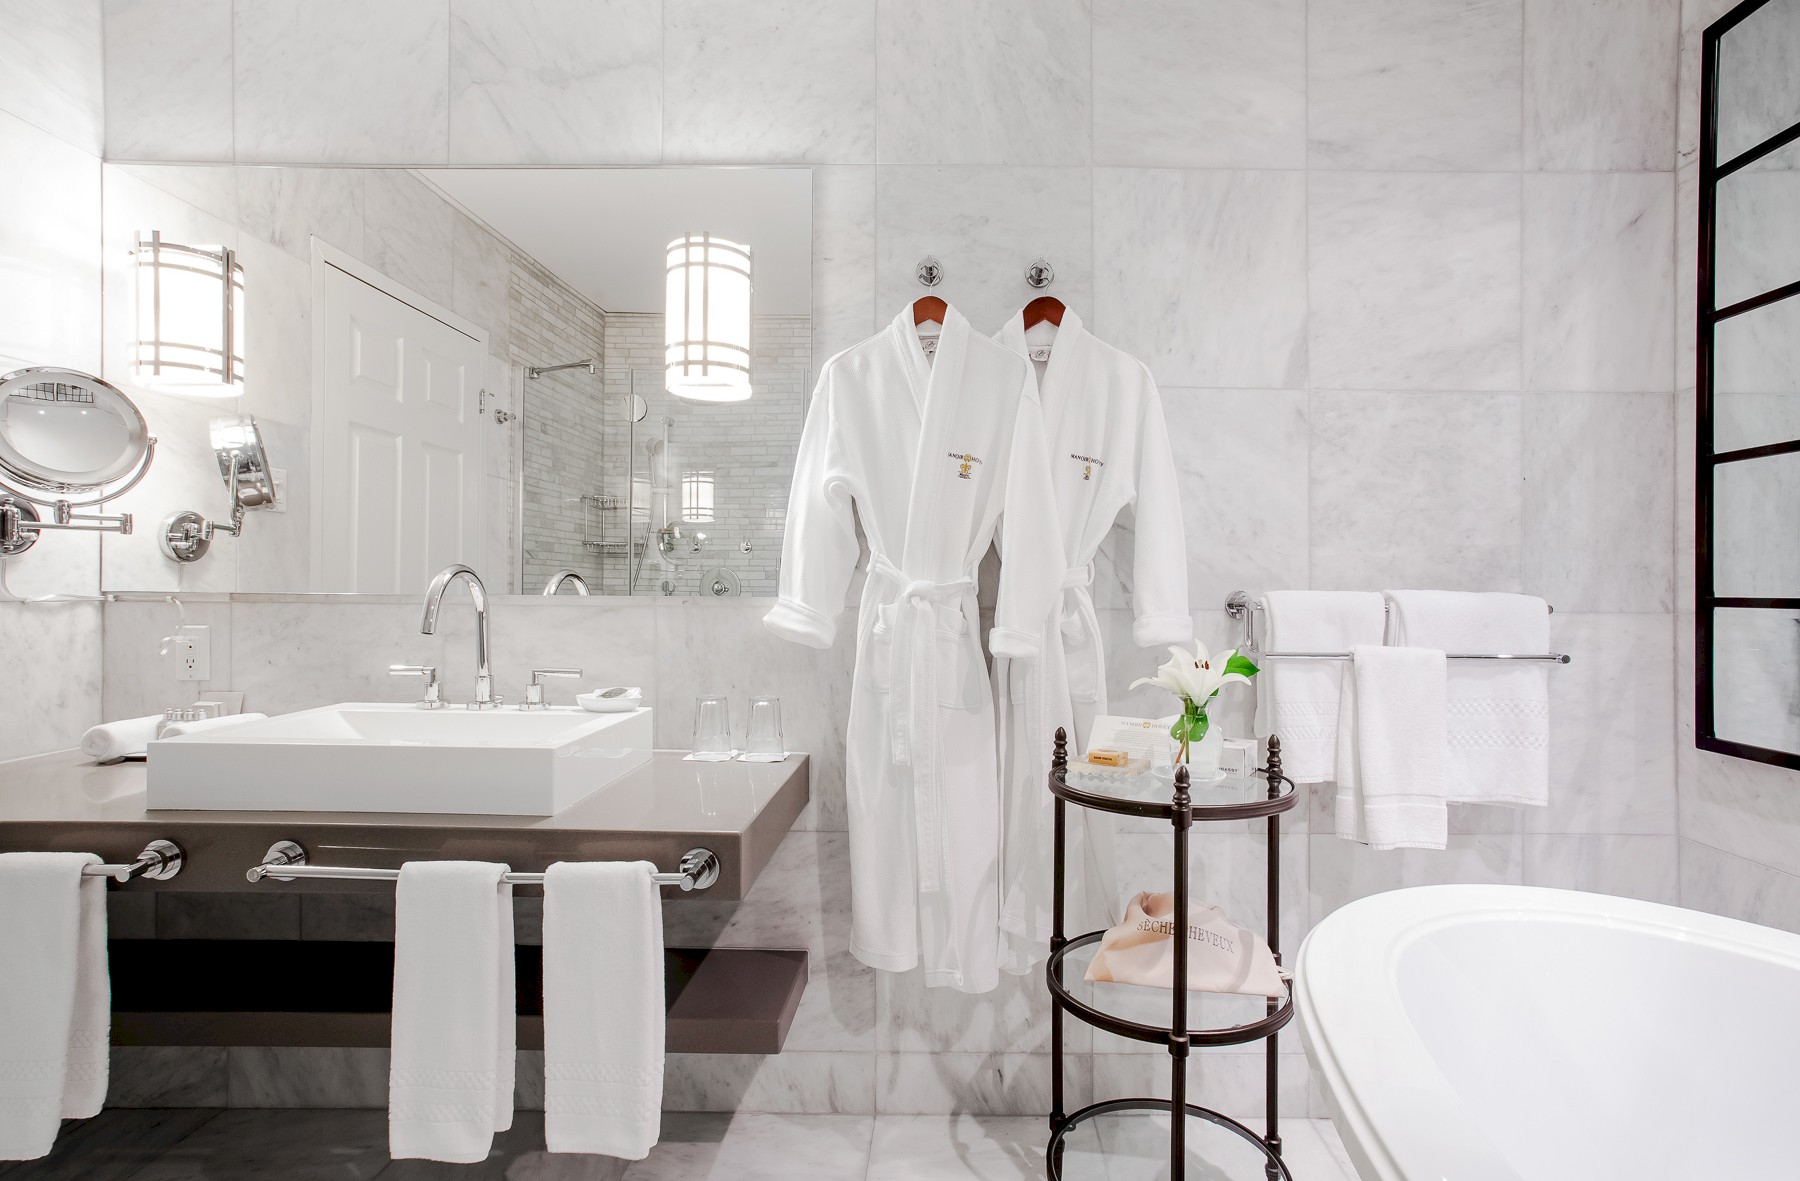 White marble bathroom with bathrobes